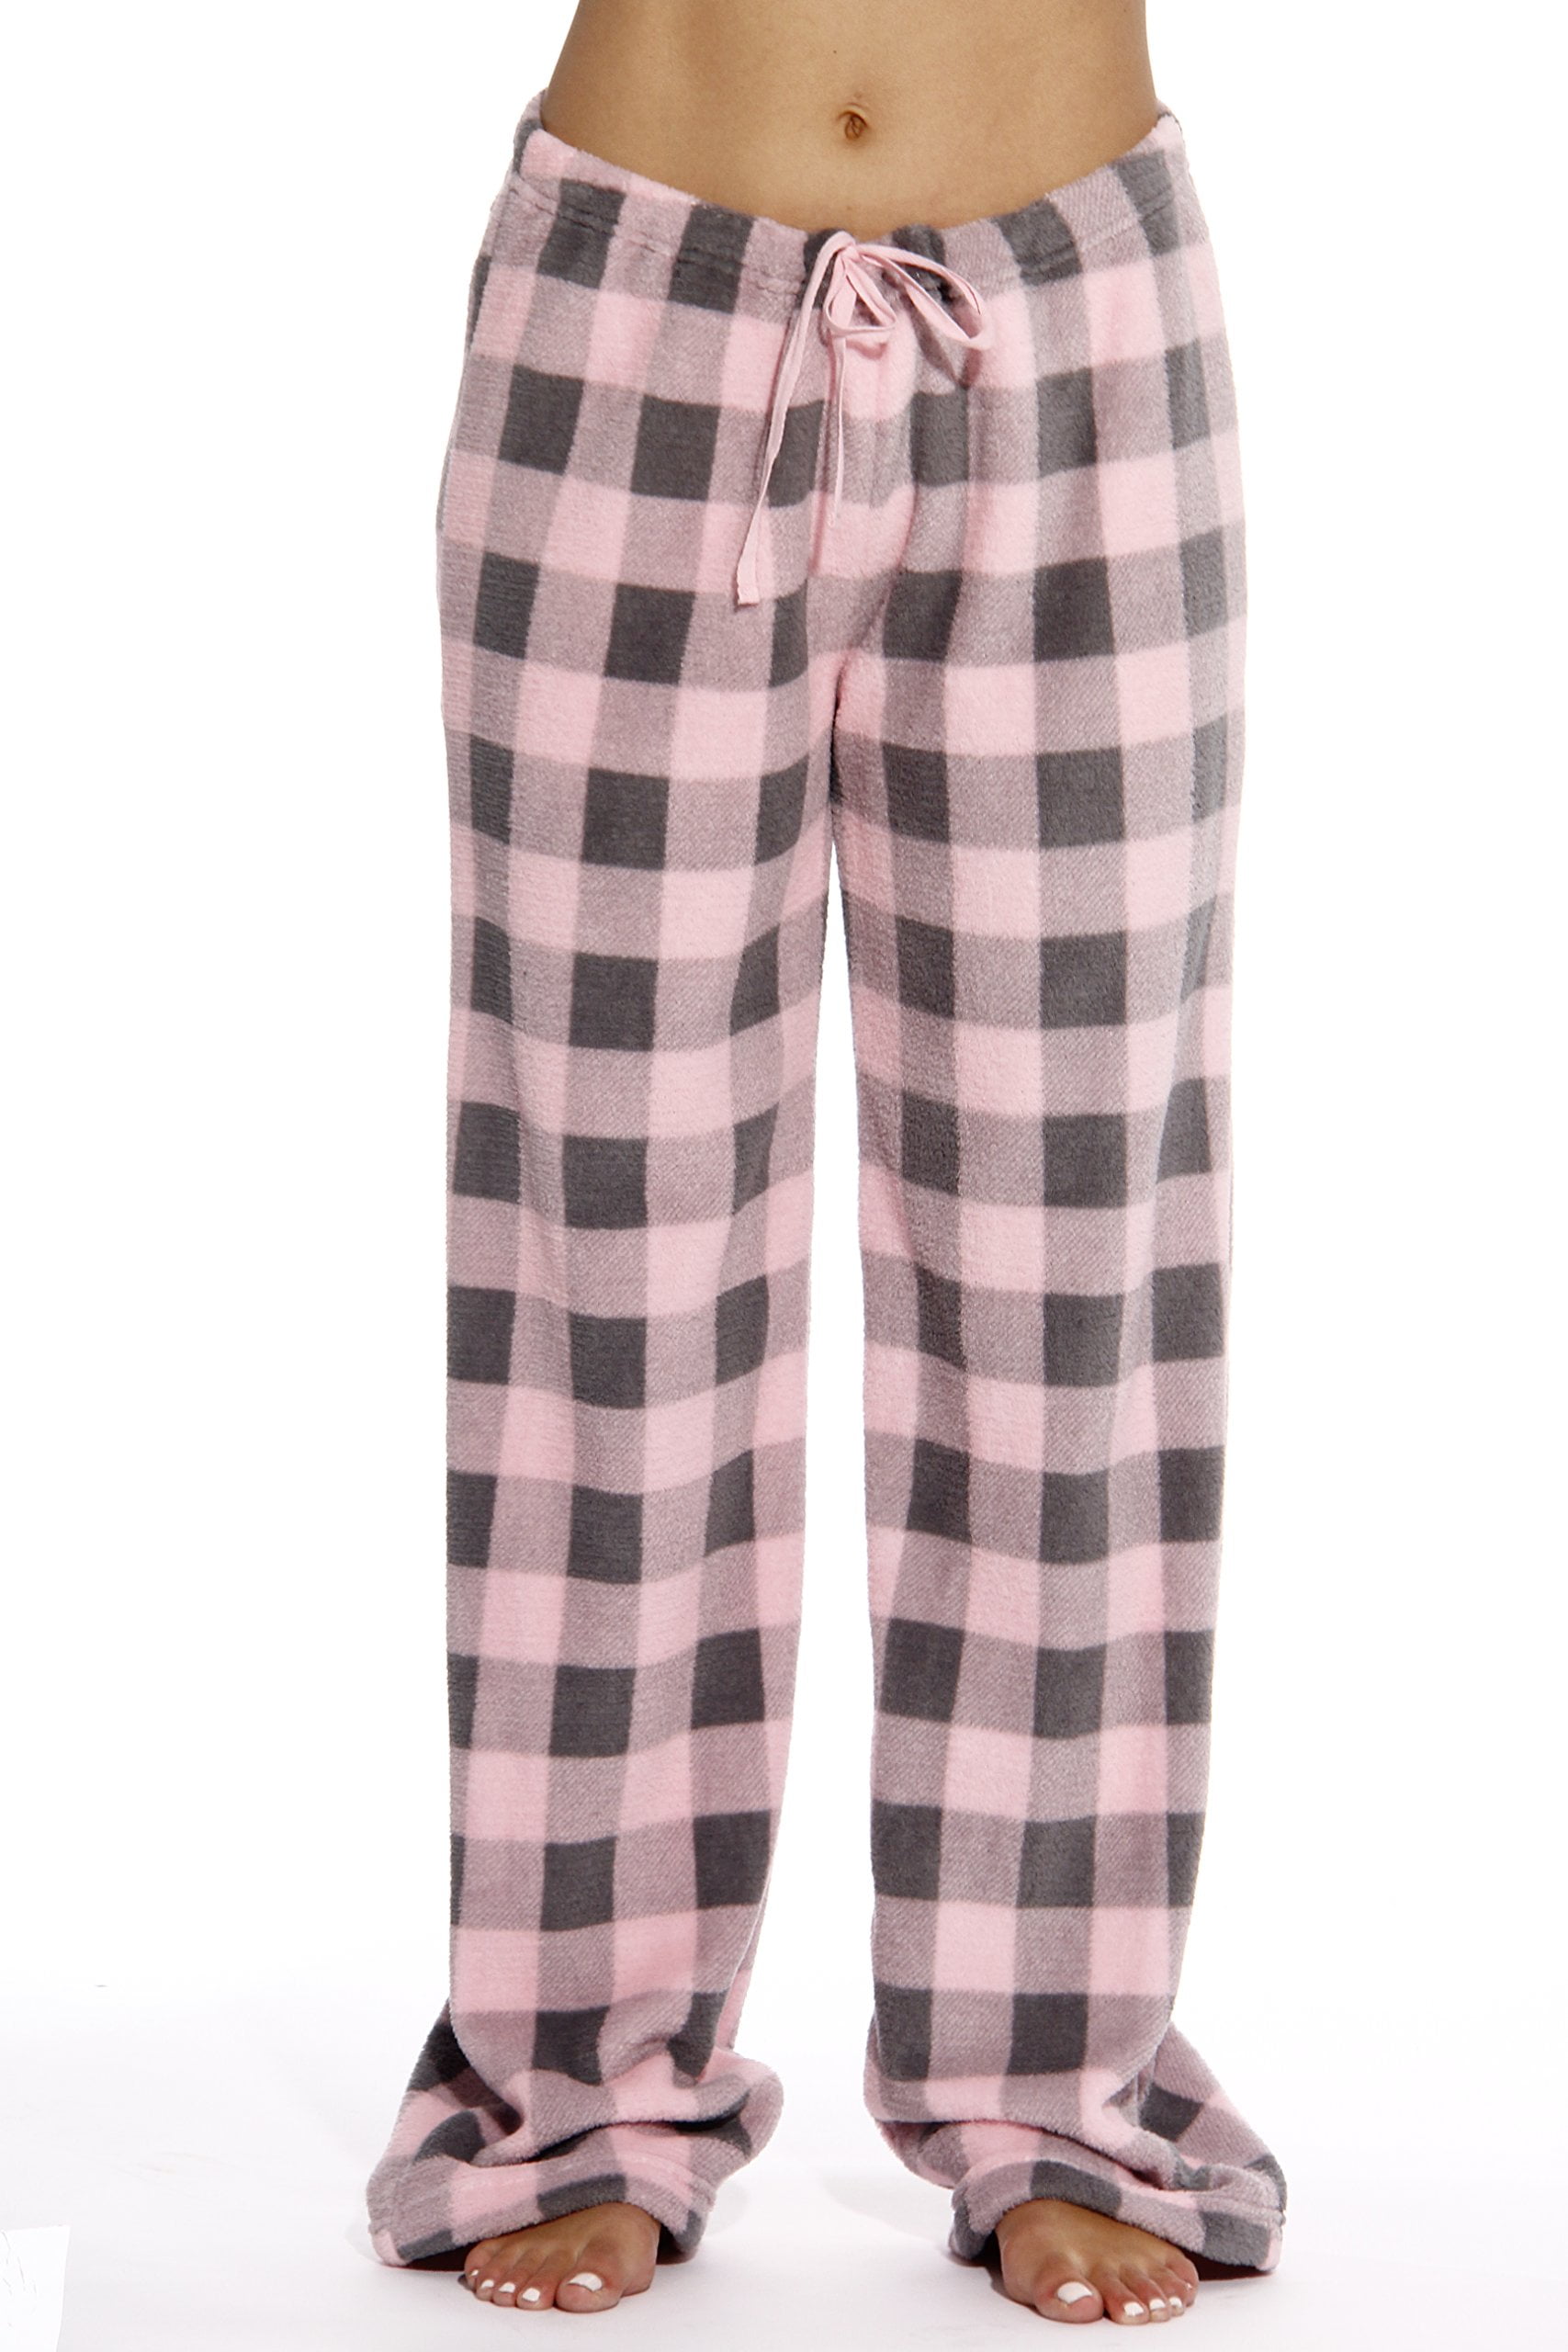 Just Love Women's Fleece Pajama Pants - Soft and Cozy Sleepwear Lounge PJs  (Buffalo Plaid Pink / Charcoal, 2X)